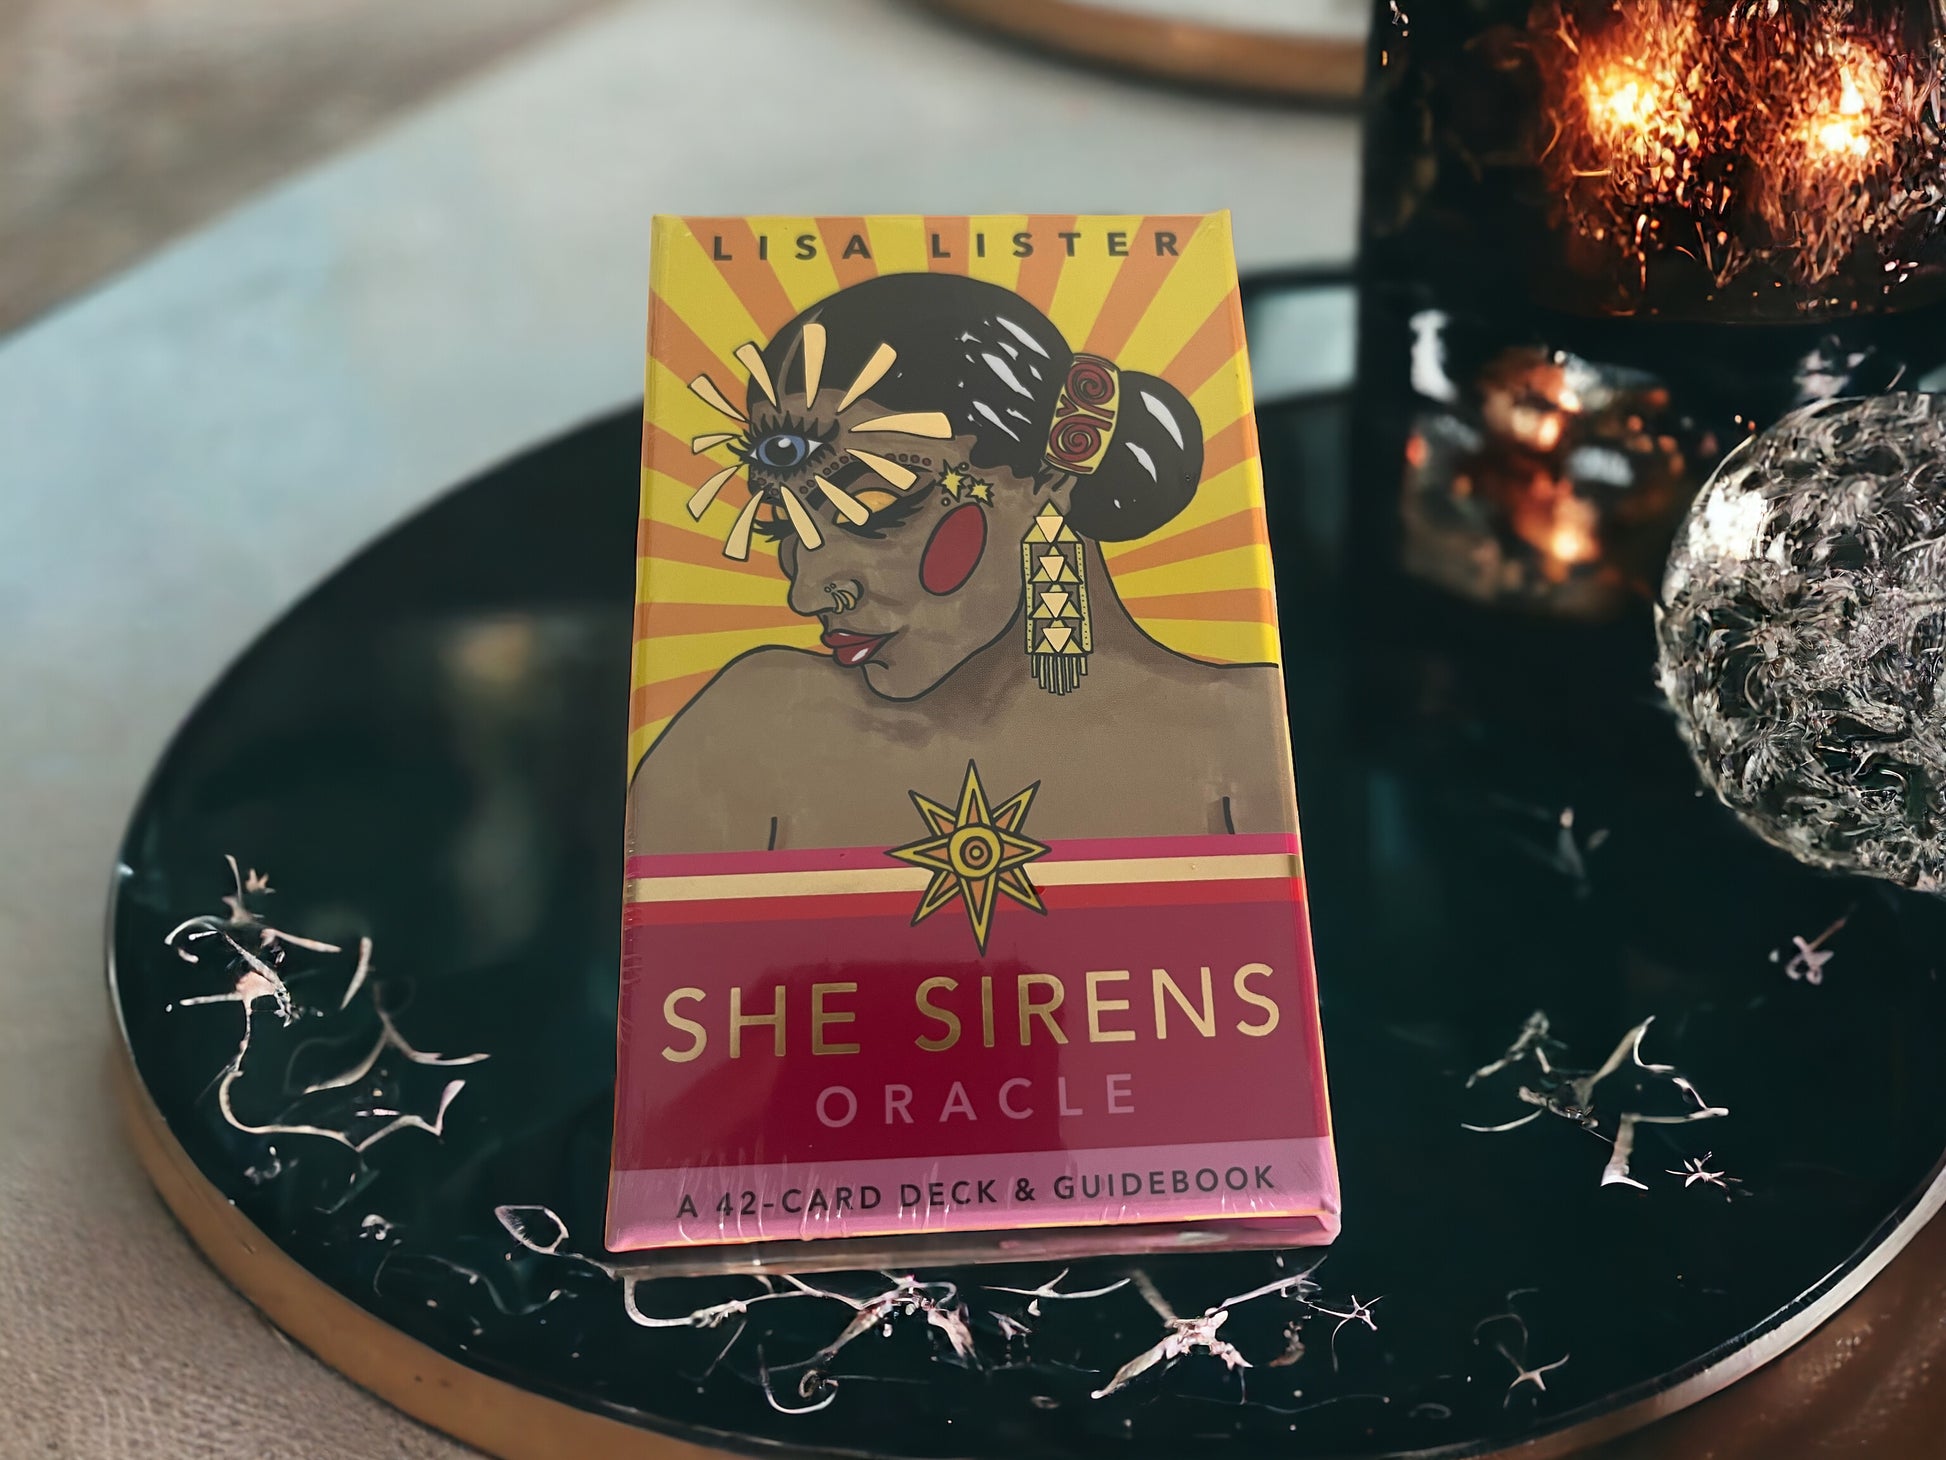 She Sirens Oracle - Lisa Lister